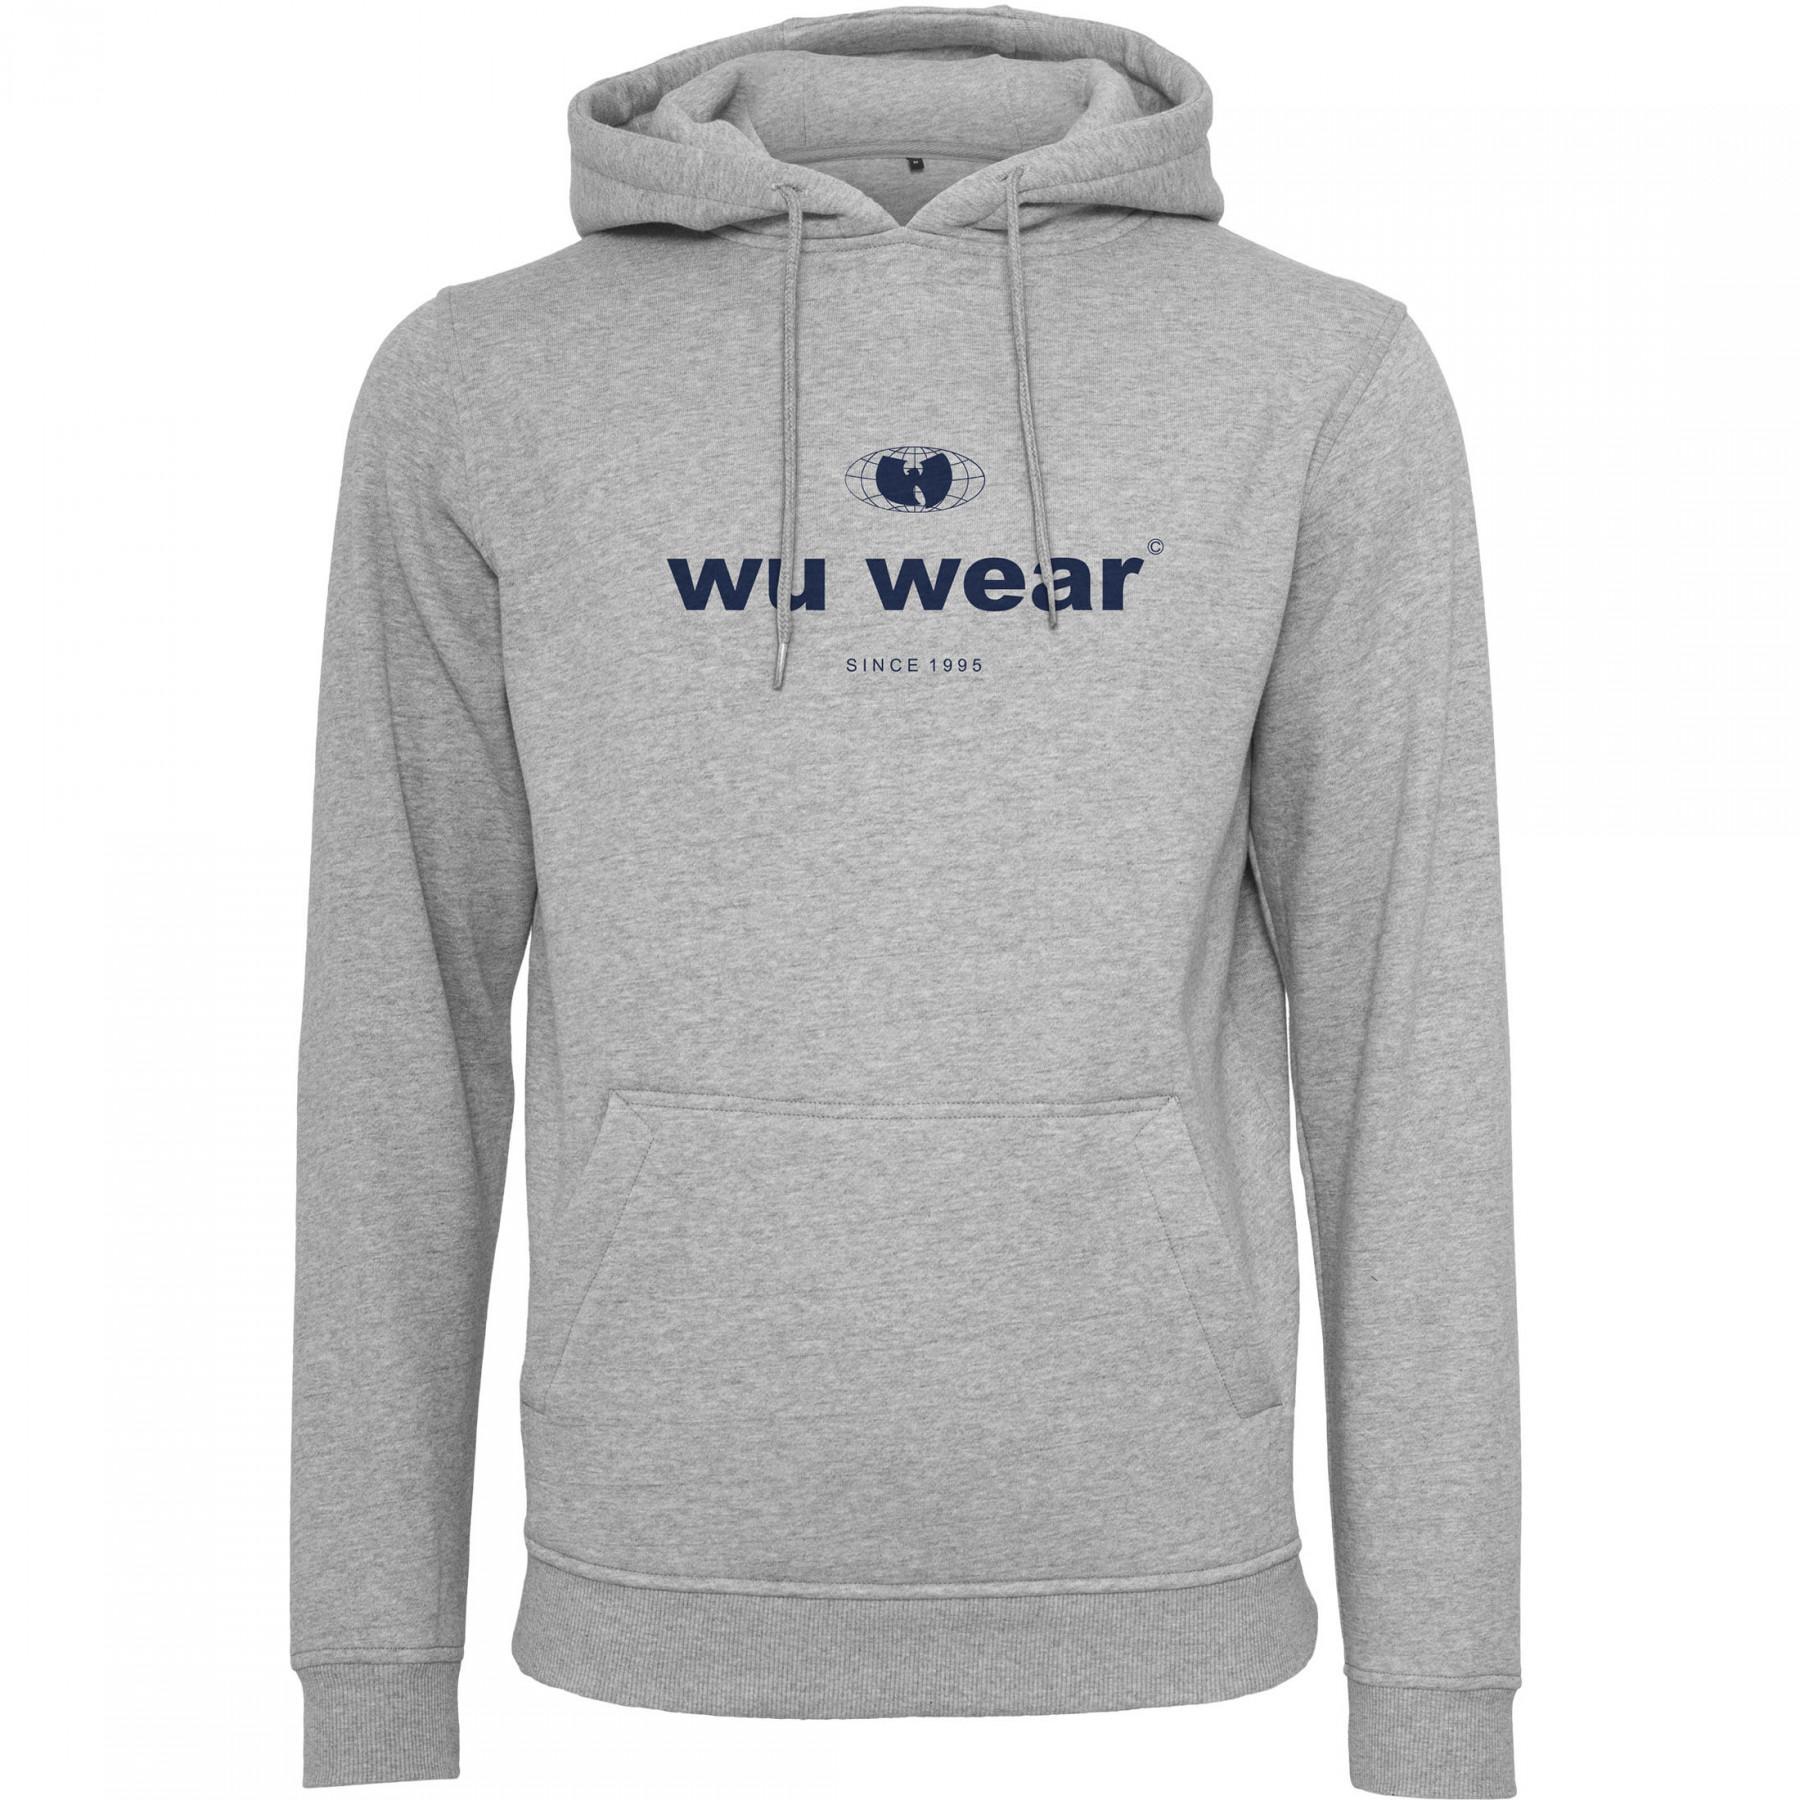 Bluza Wu-wear since 1995 2.0